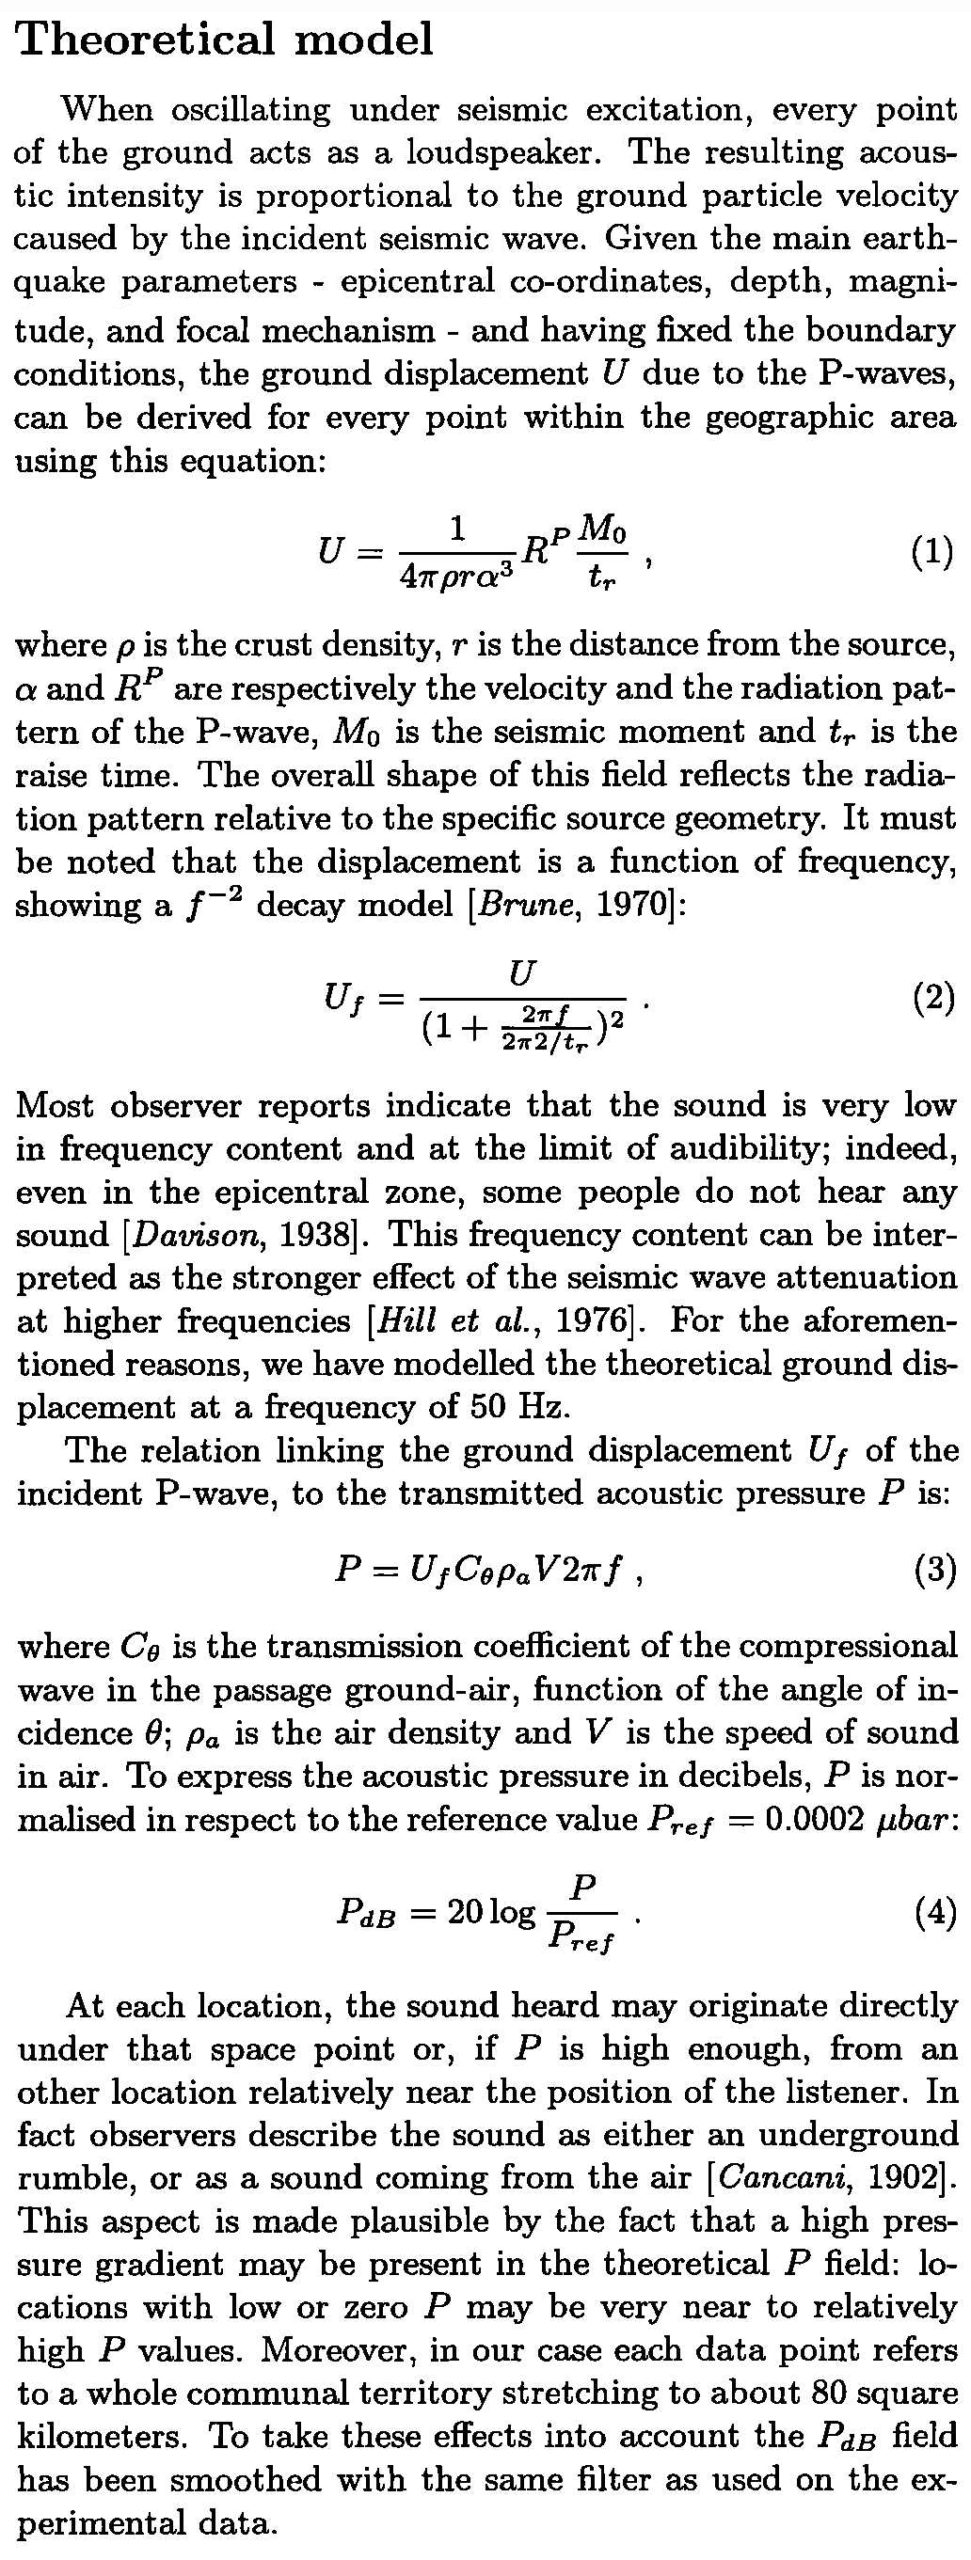 Theoretical Model of Earthquake Sound